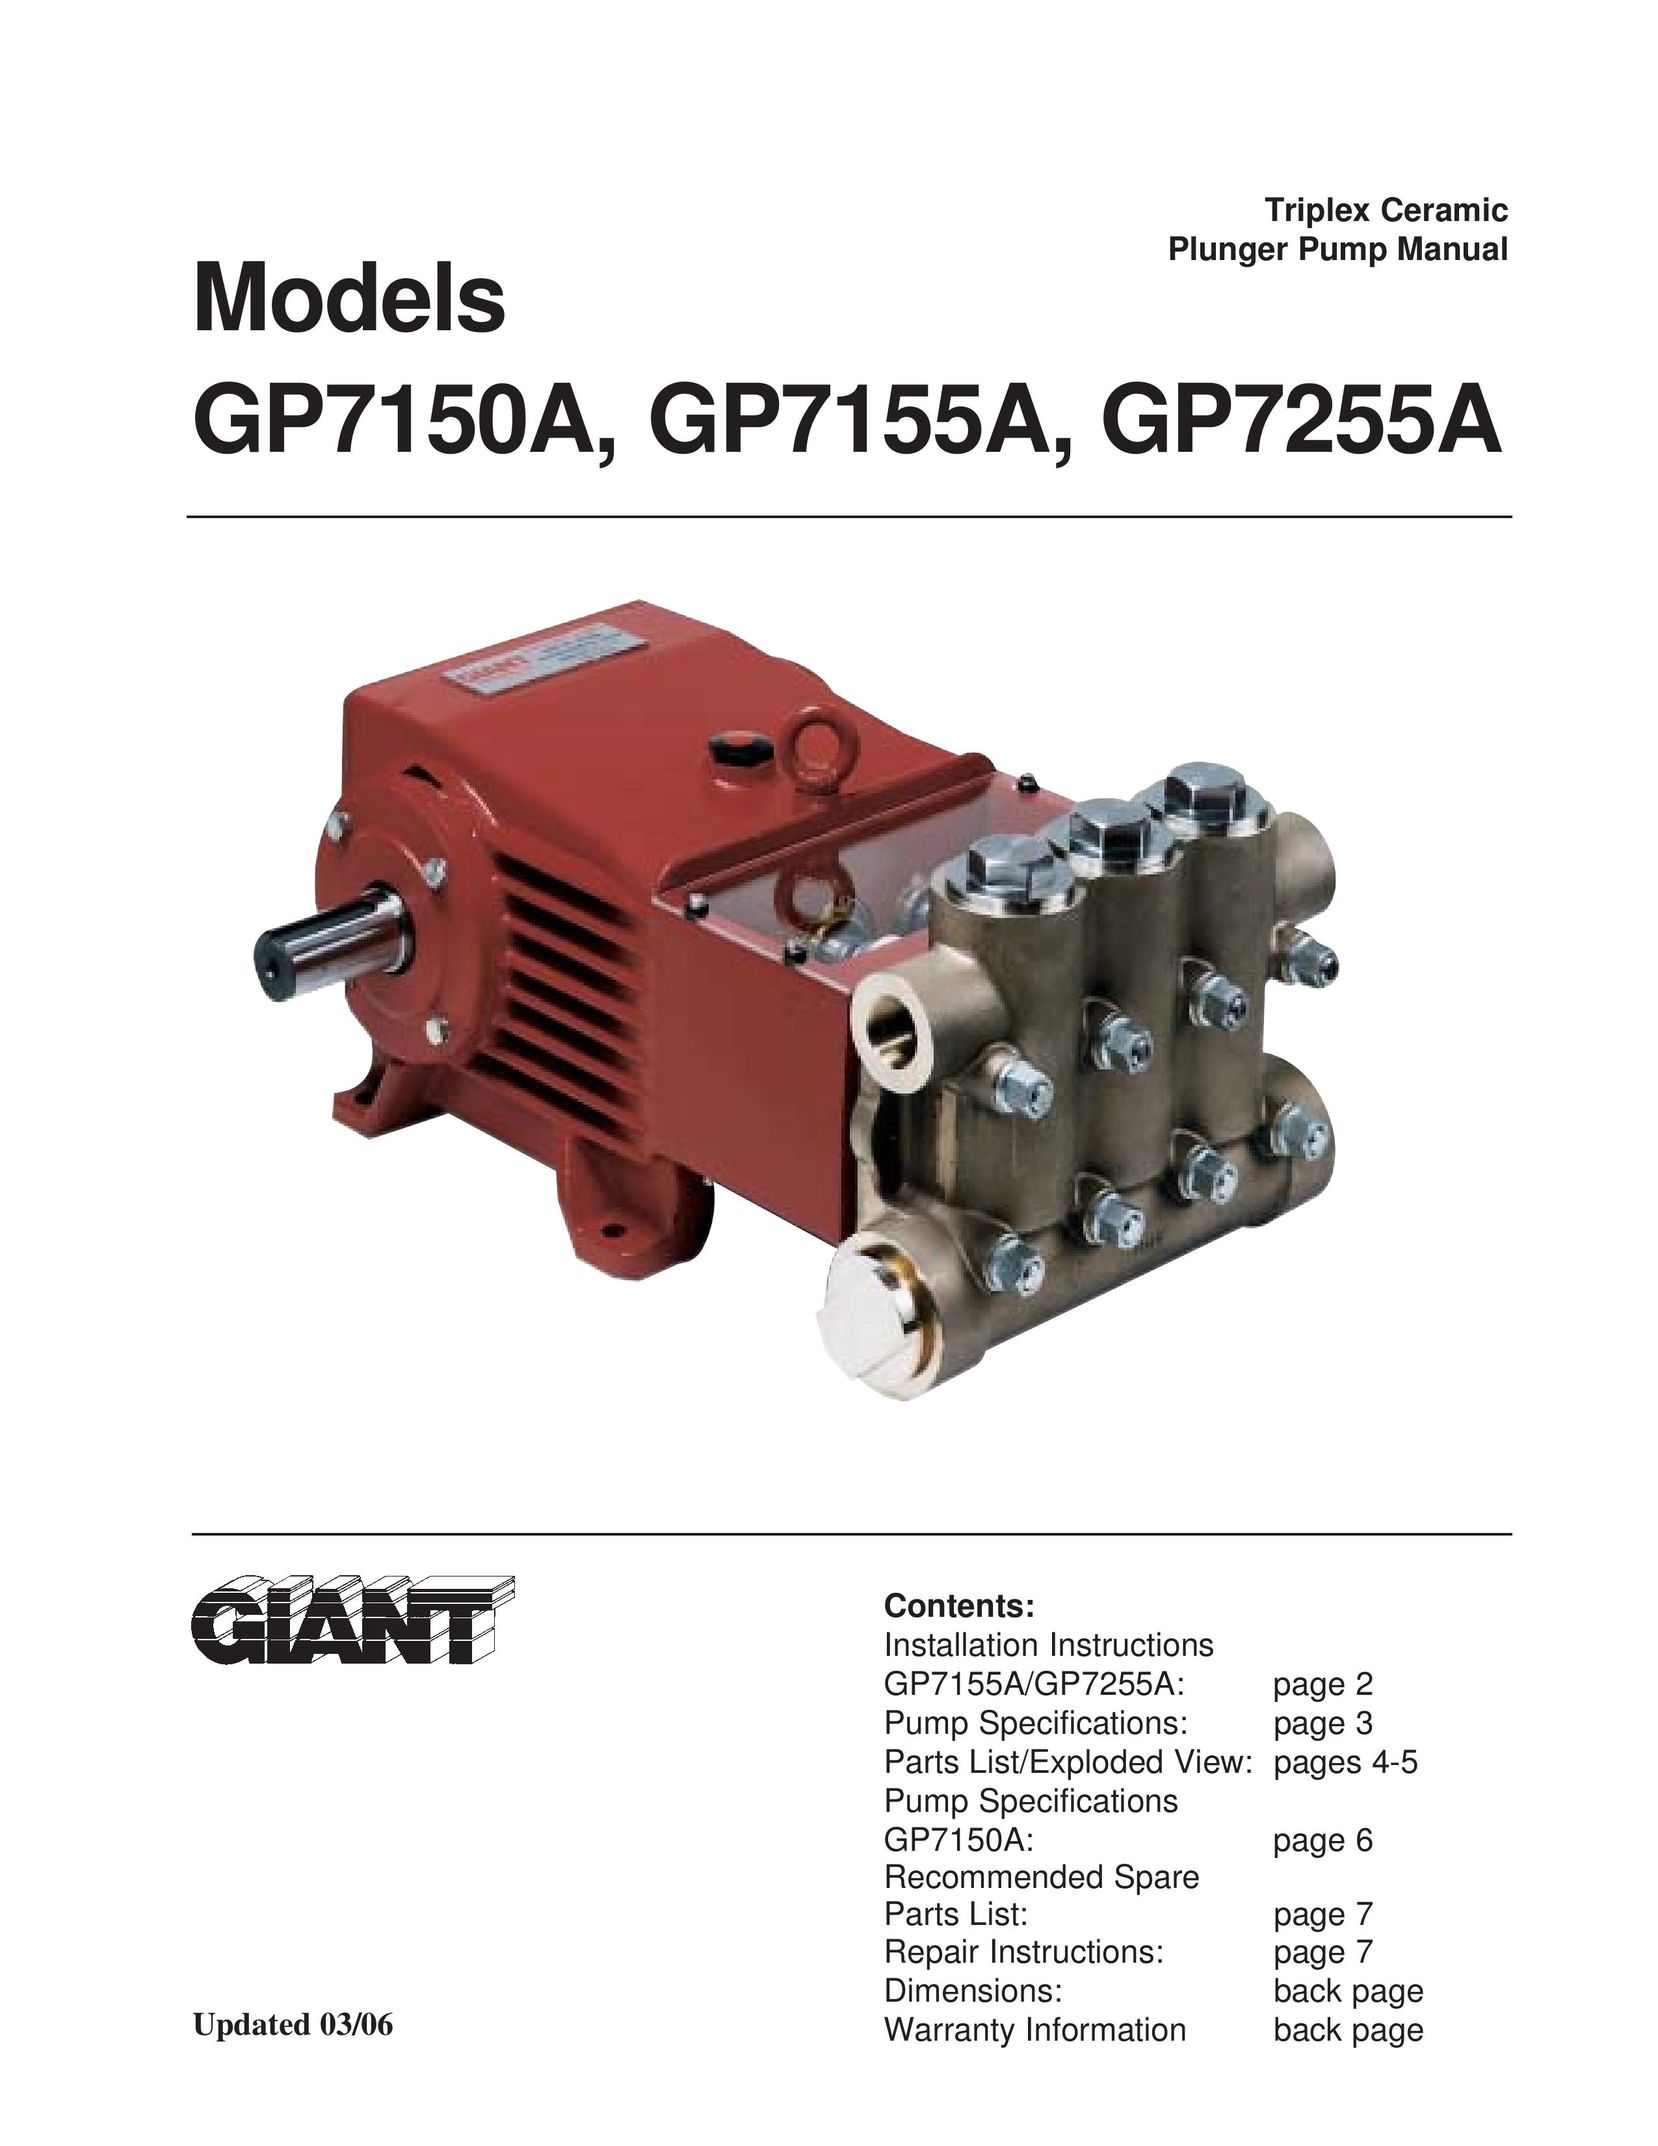 Giant GP7150A Water Pump User Manual